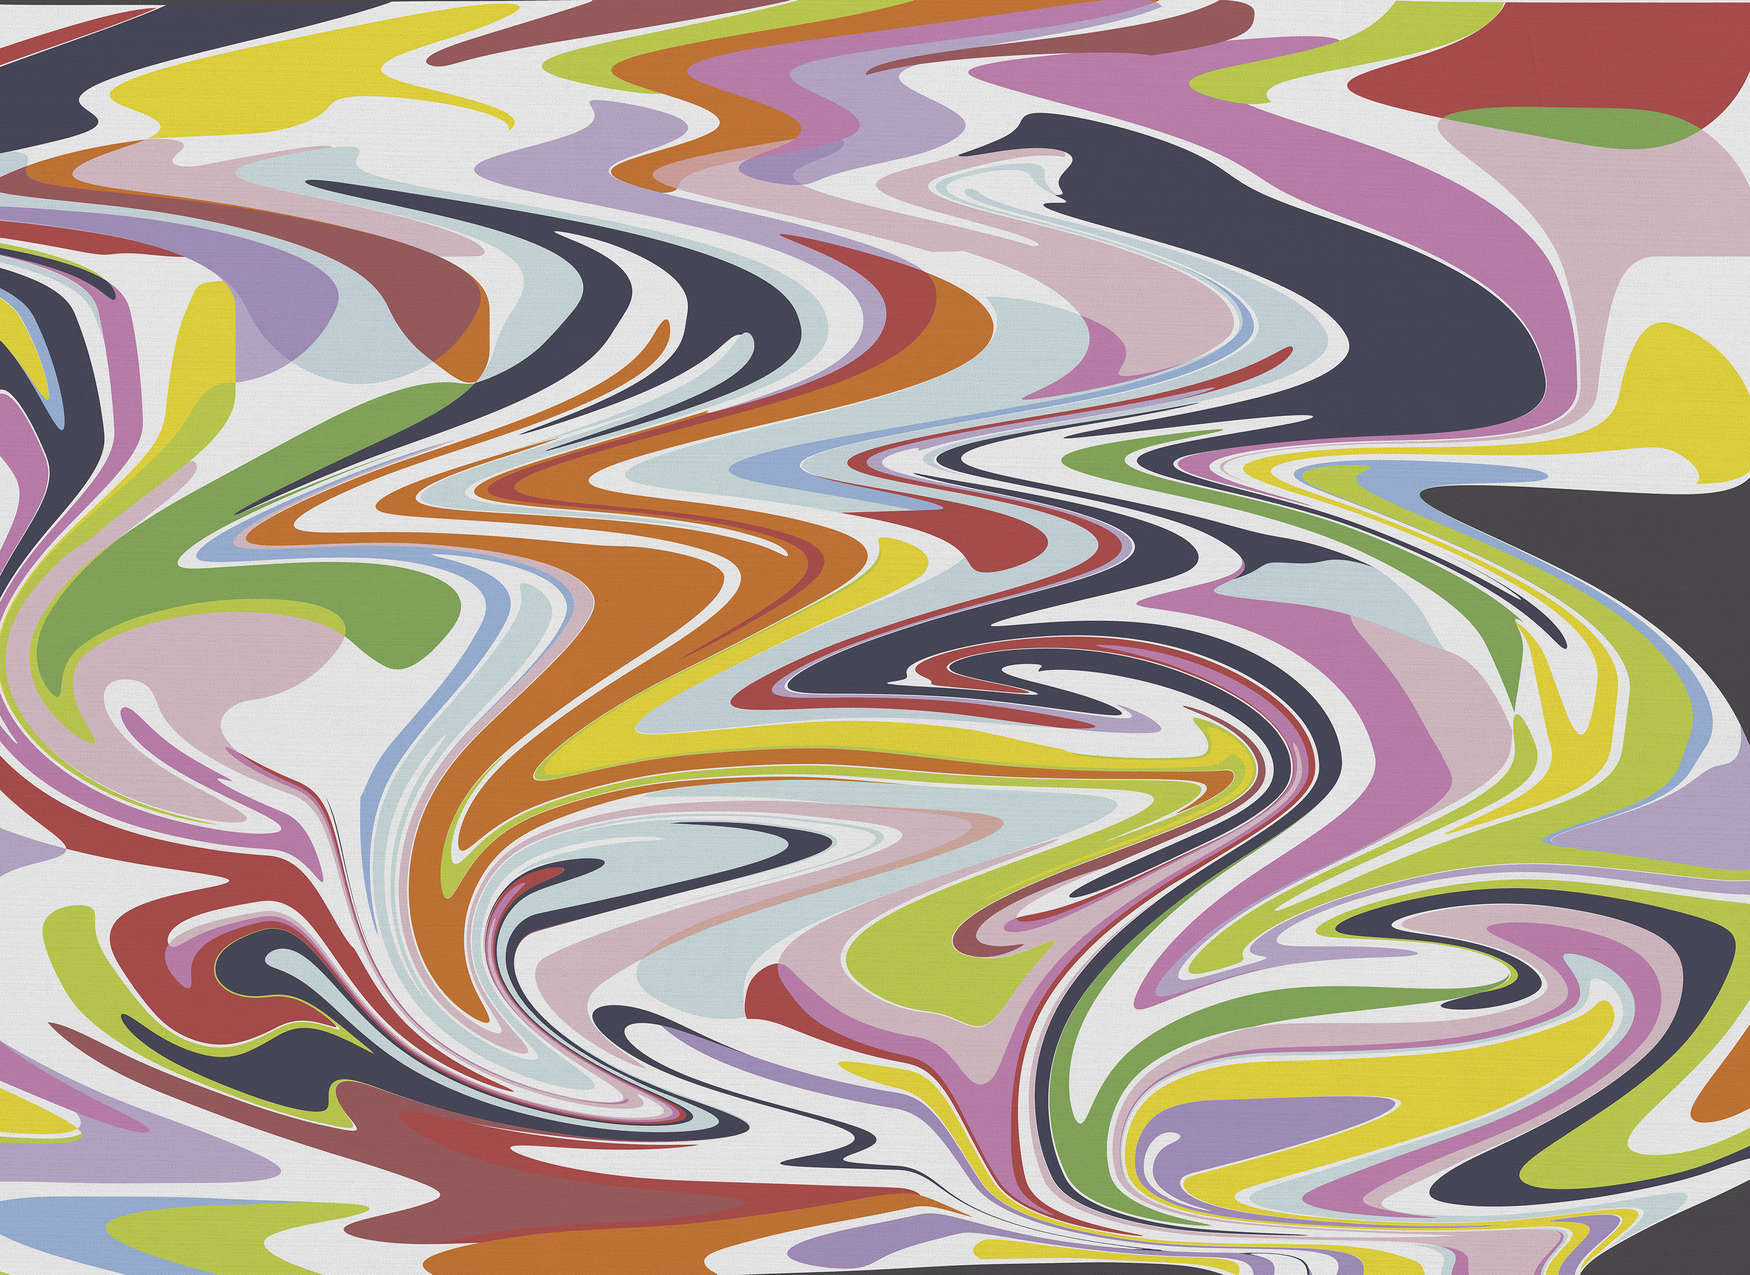             Fototapete abstraktes Farbgemisch buntes Muster – Bunt
        